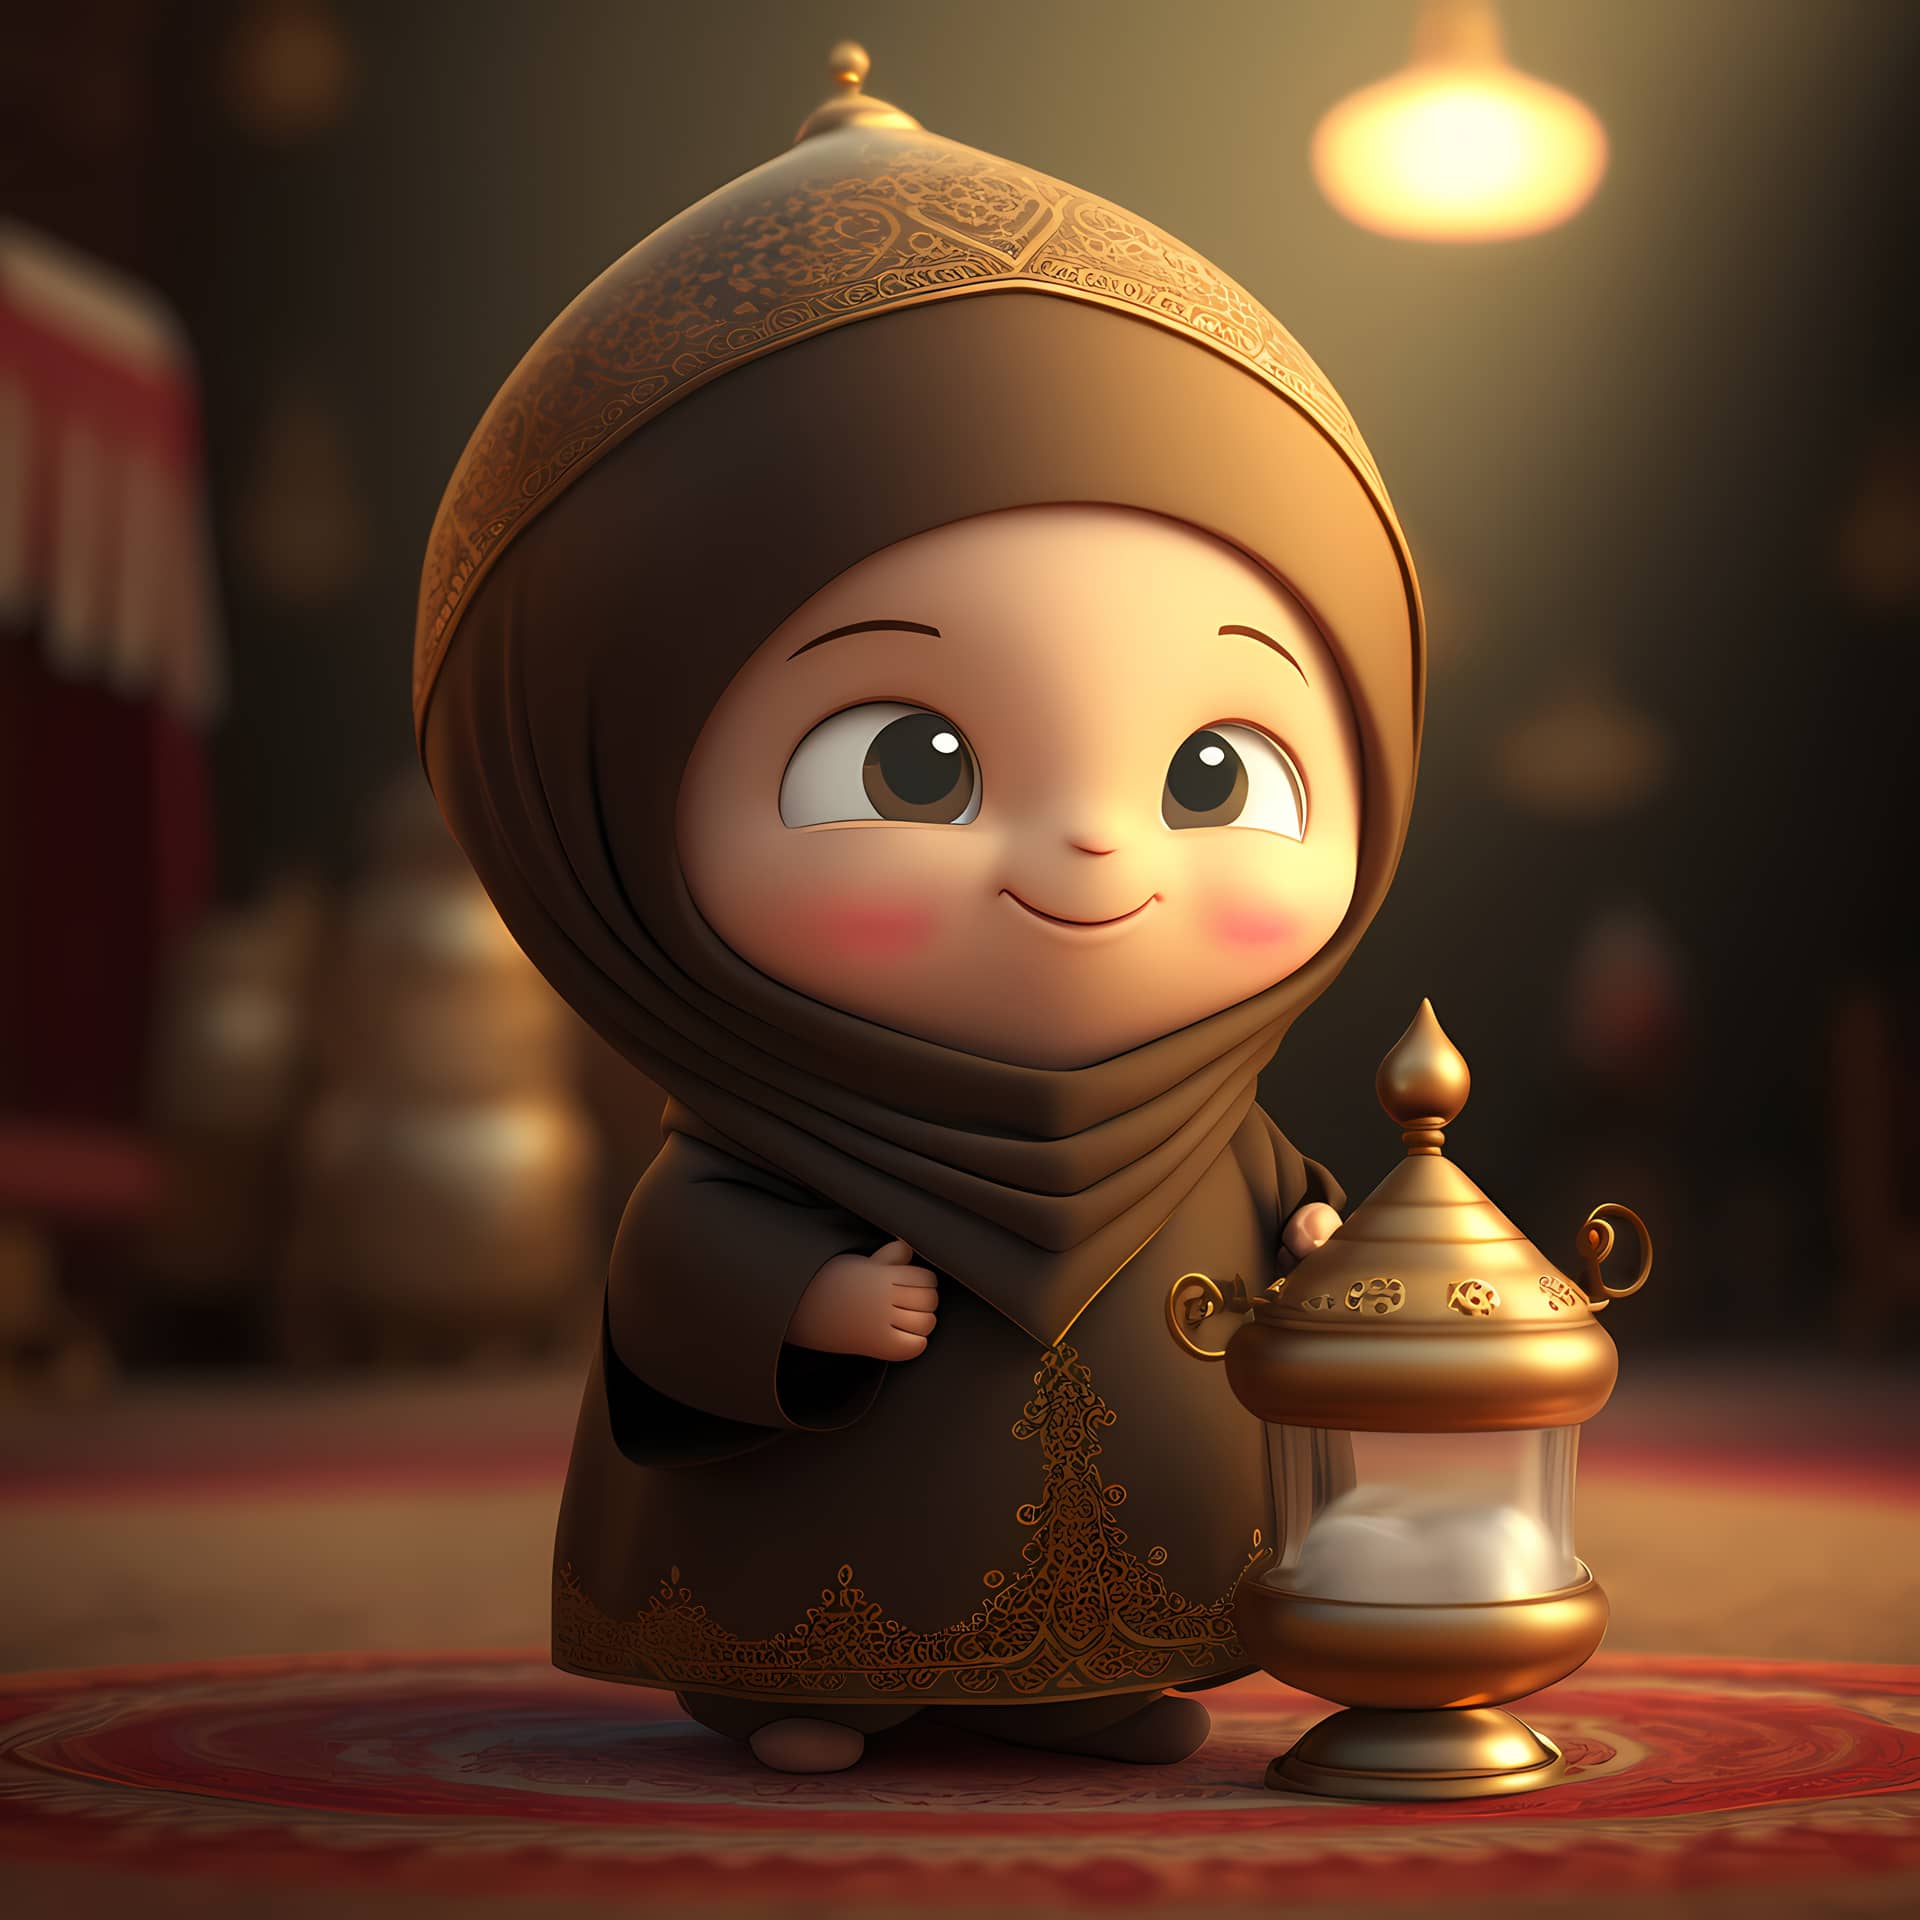 Adorable cute muslim children cartoon character cartoon profile pictures